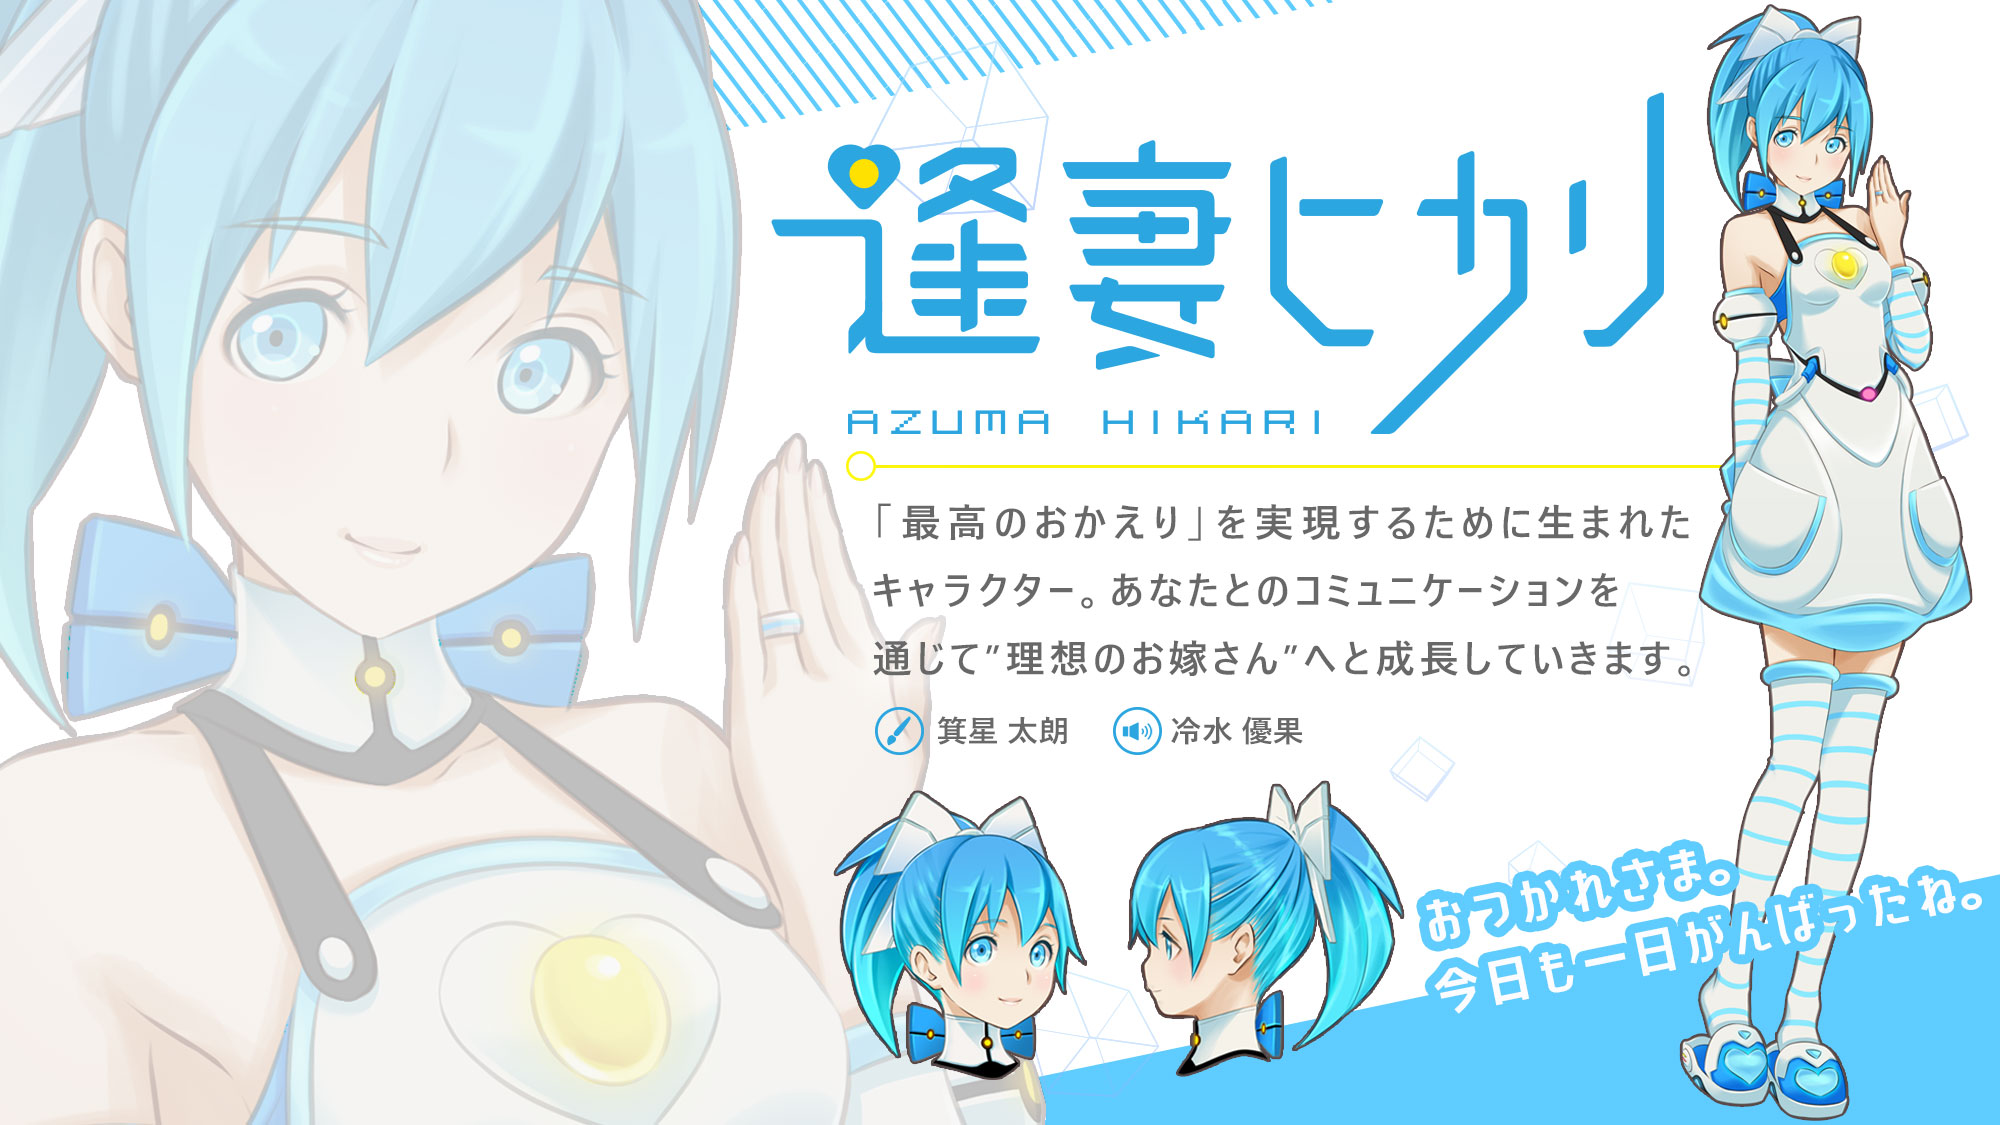 Gatebox character Azuma Hikari